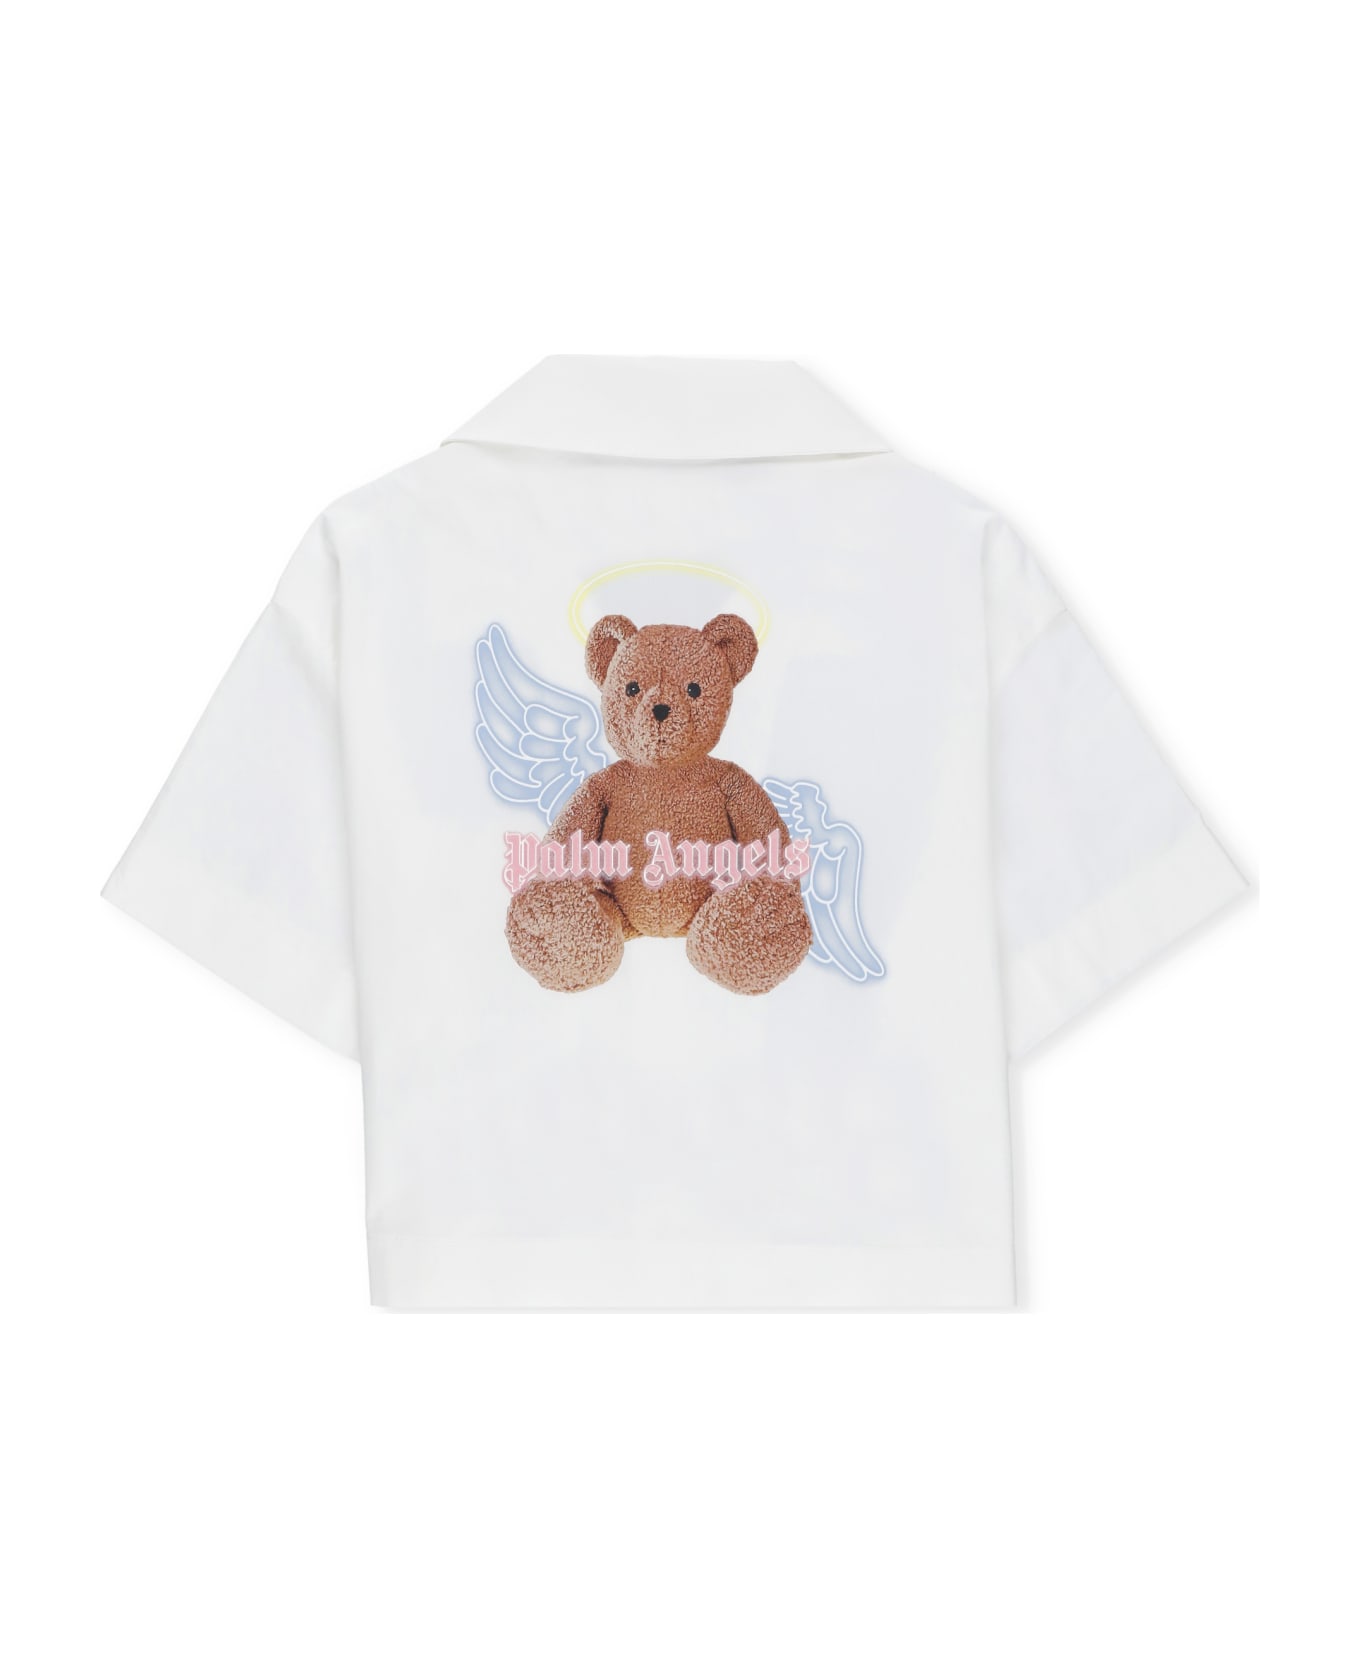 Palm Angels Bear Angel Shirt - White